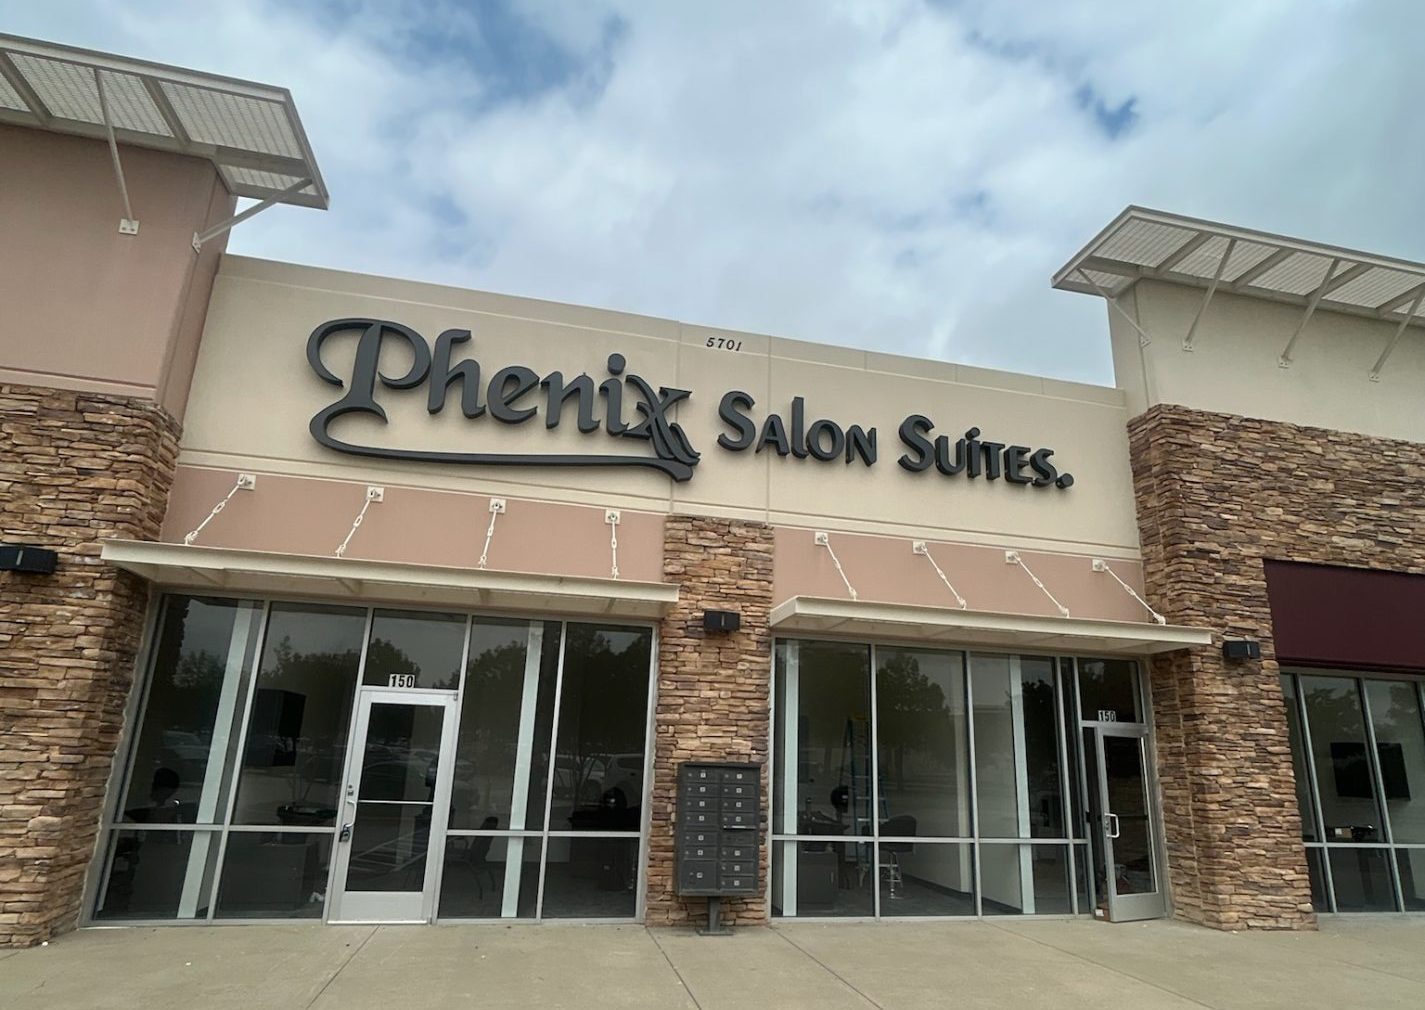 Phenix Salon Suites’ semi-absentee management model allows for franchisee flexibility.